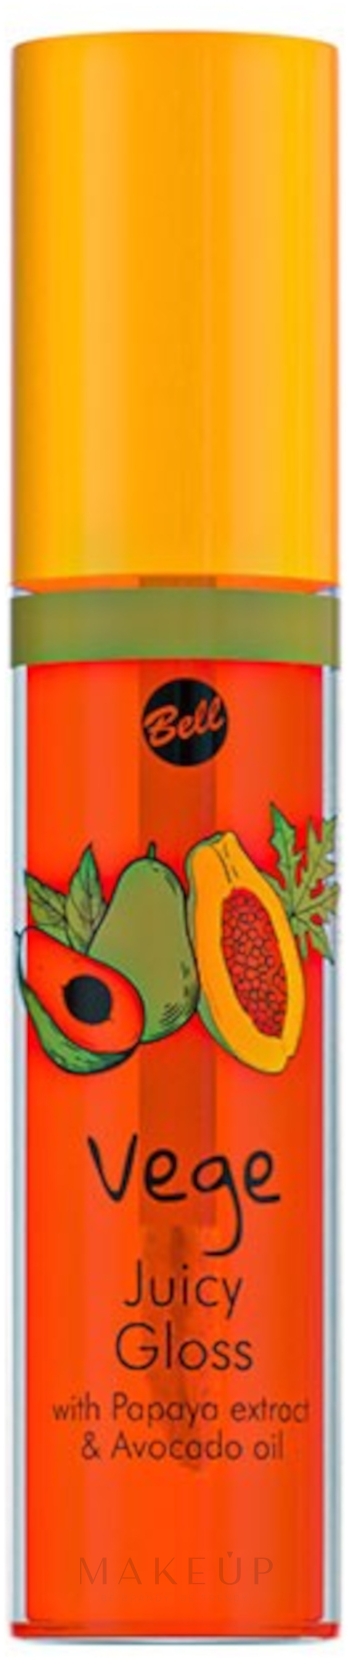 Lipgloss mit Papayaextrakt und Avocadoöl - Bell Vege Juicy Gloss — Bild 02 - Bubbly Orange